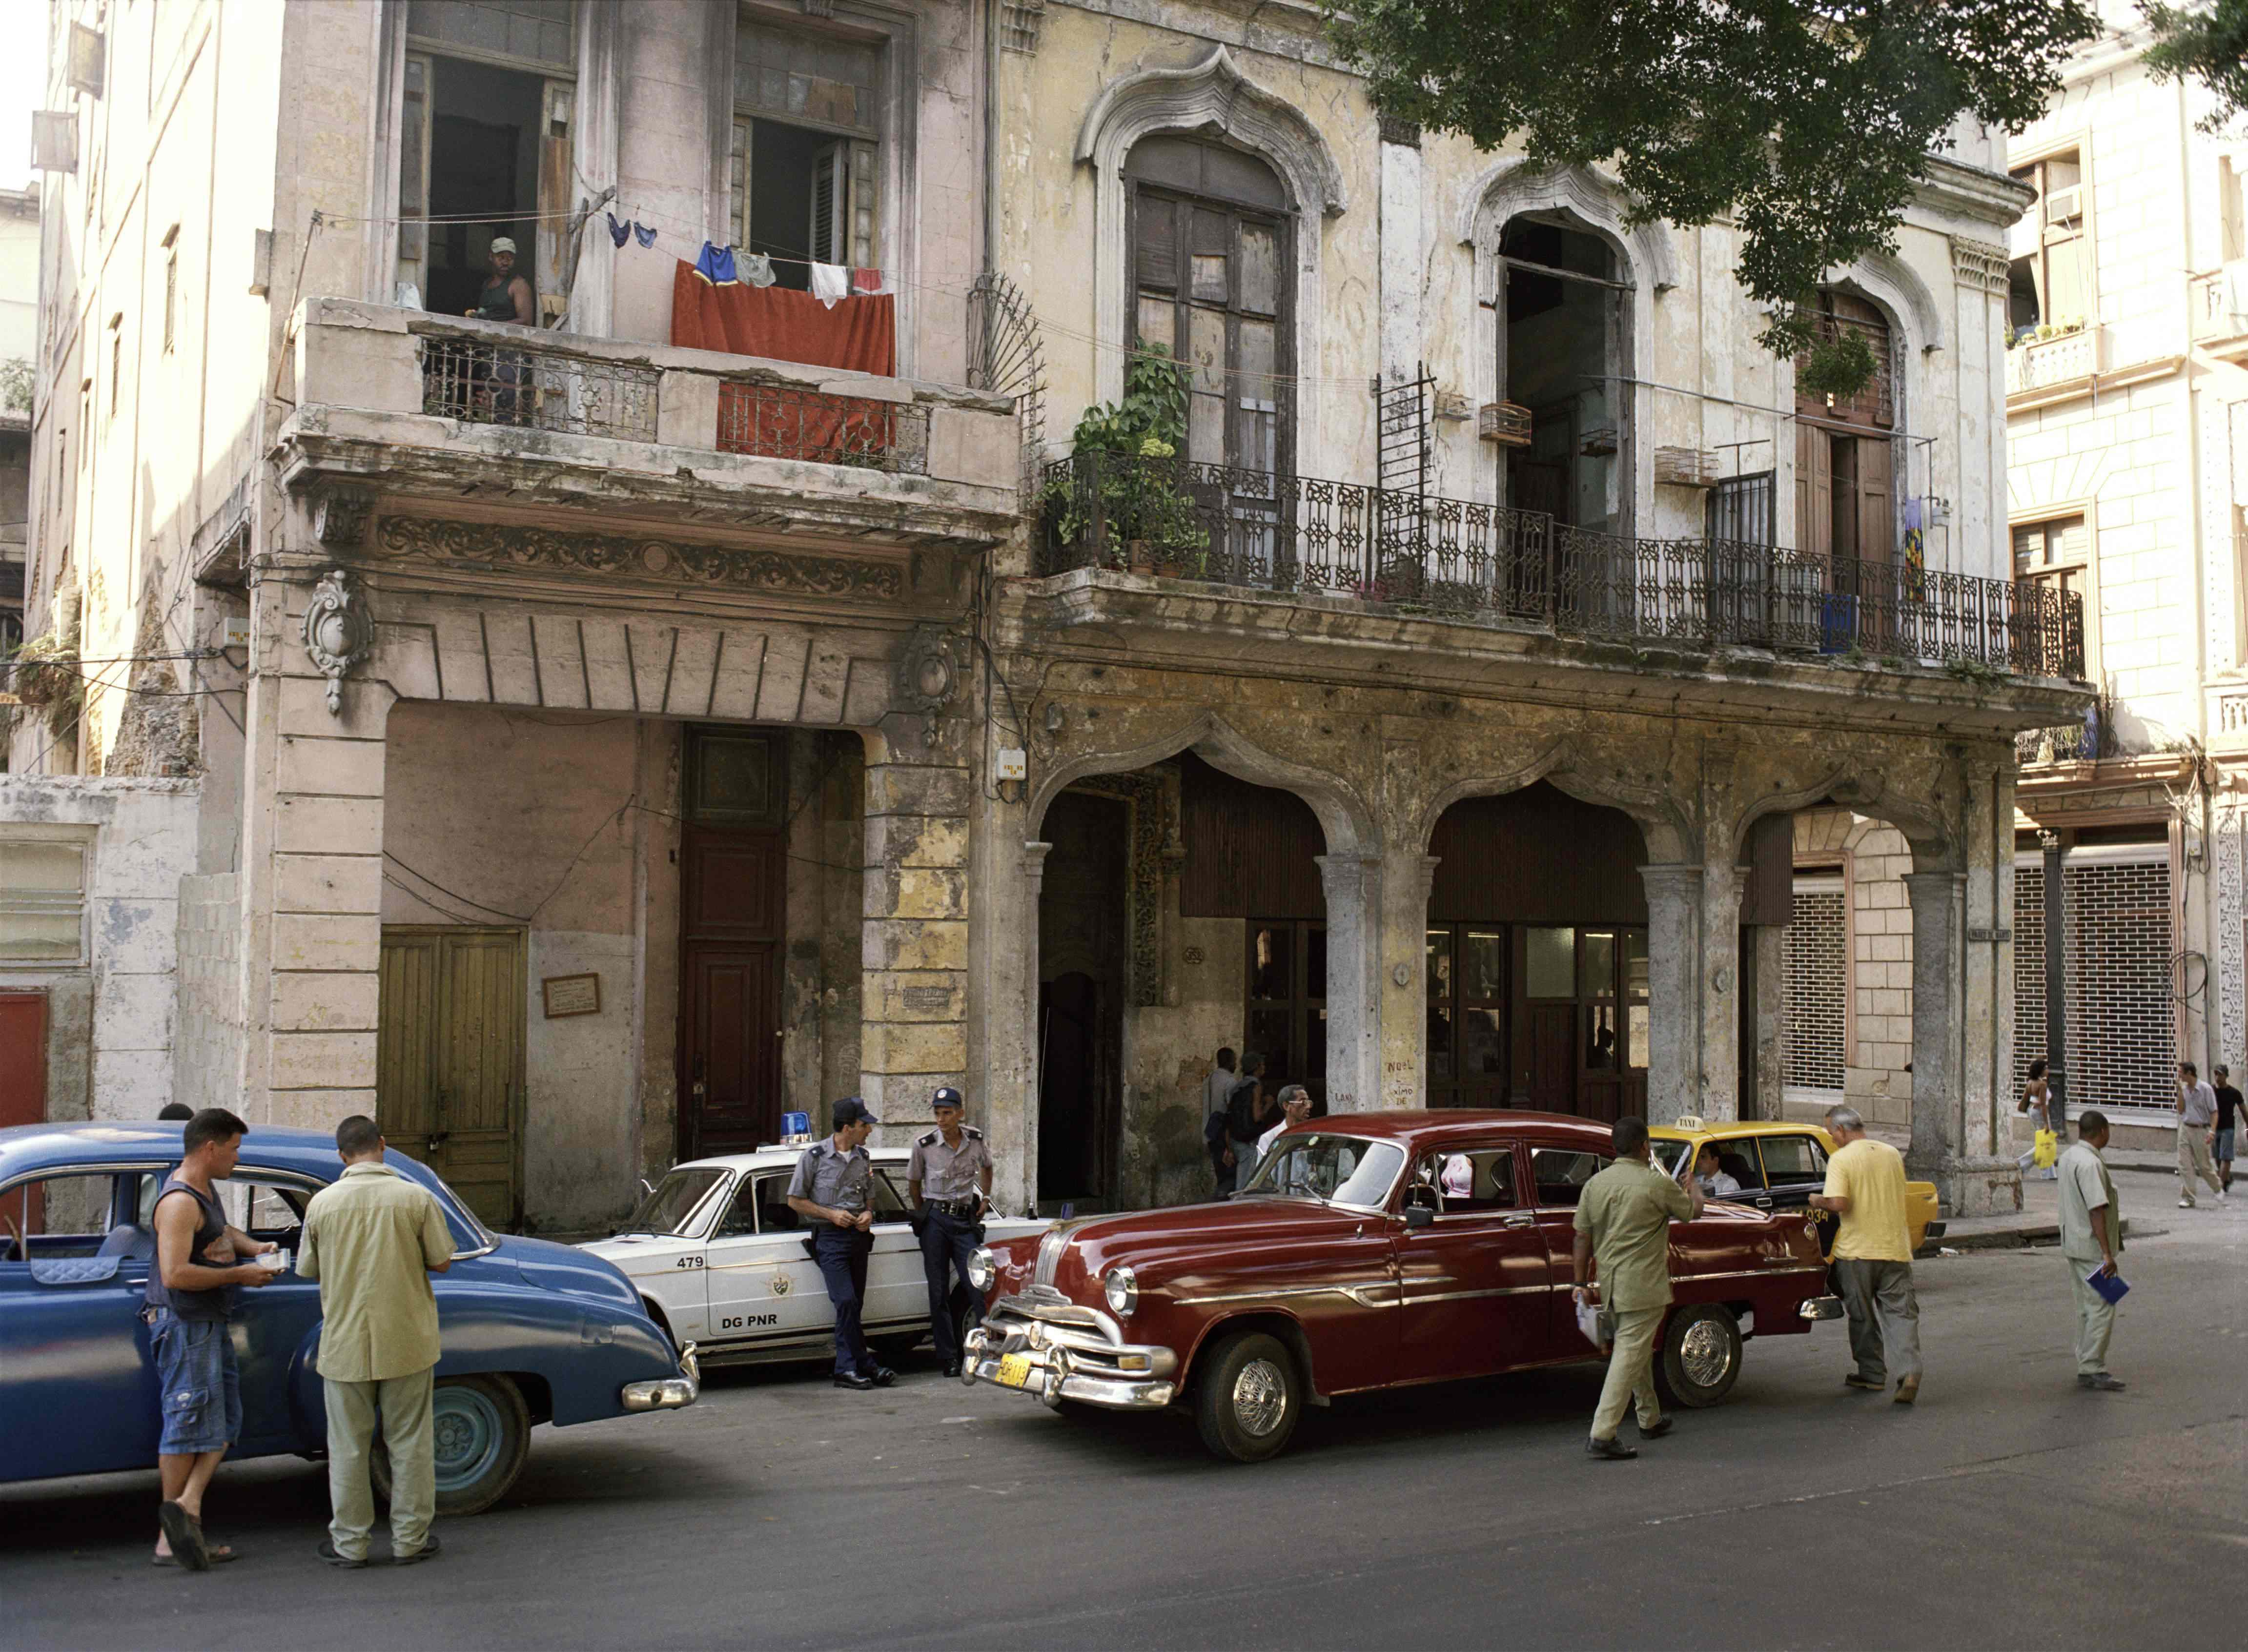 Una strada a L'Avana nel 2004 (Infophoto)